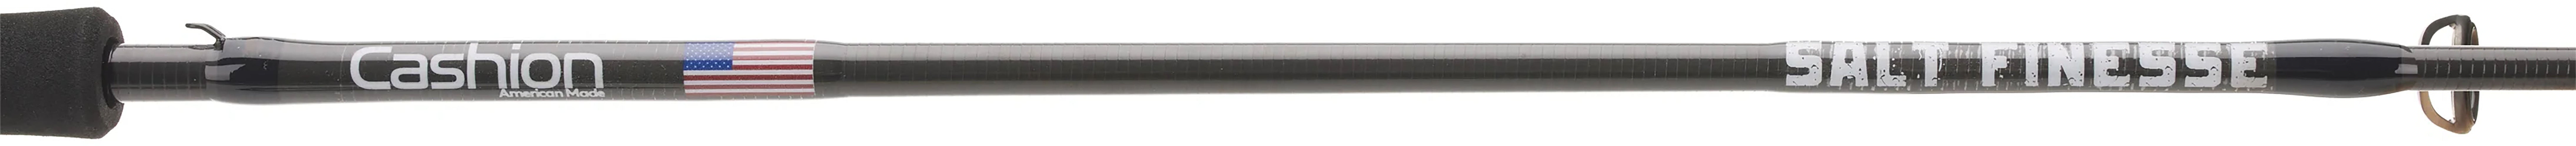 Cashion ICON Series Saltwater Finesse Multi Purpose Spinning Rod